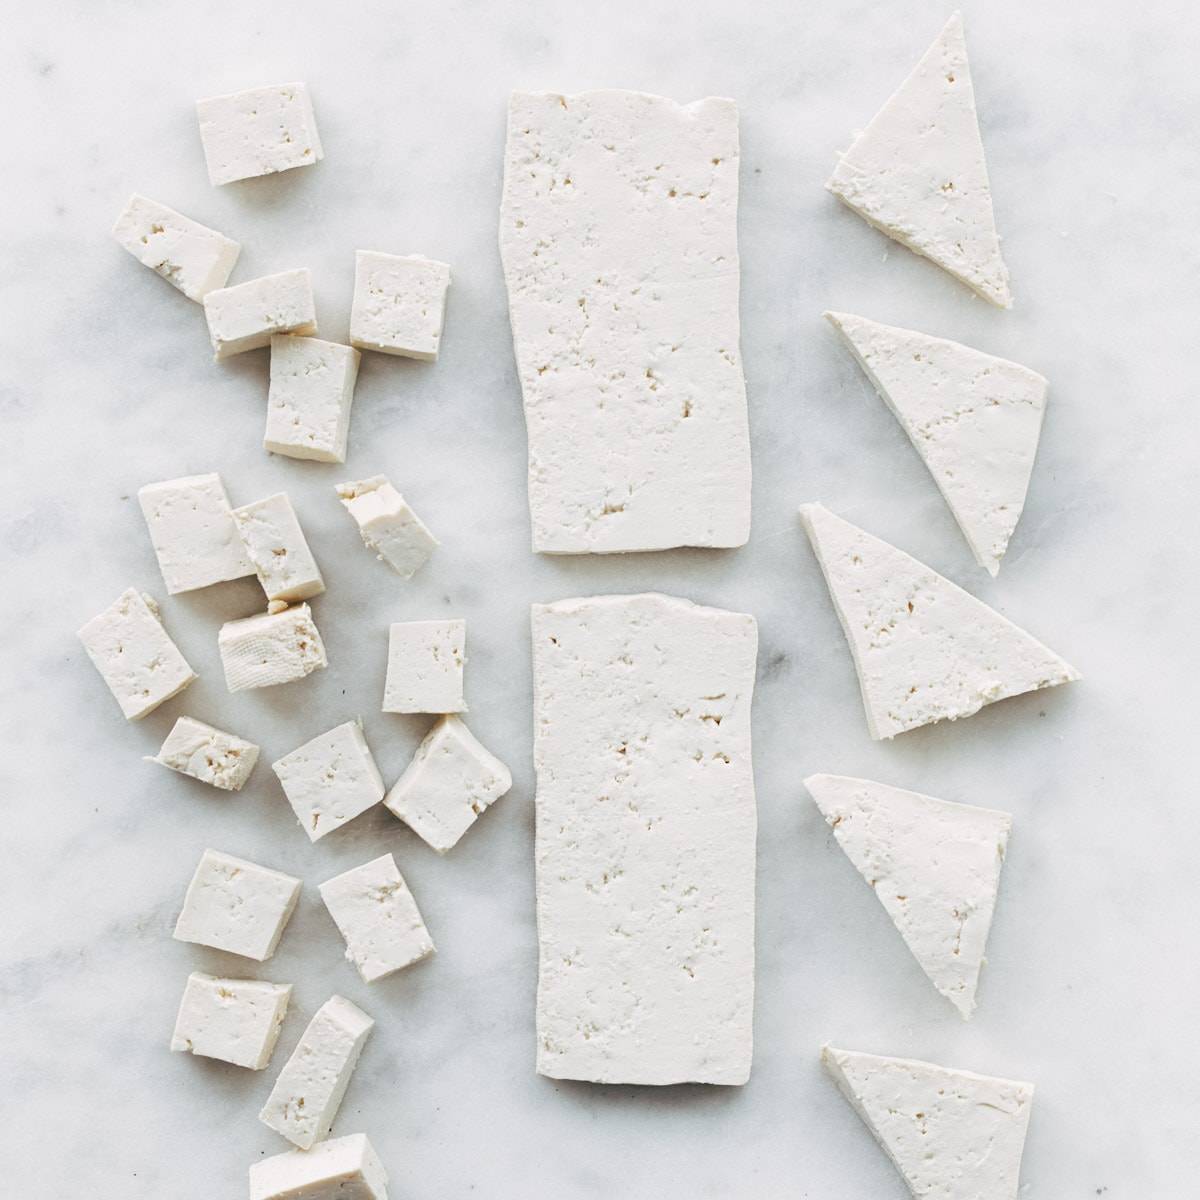 Tofu cut into shapes.